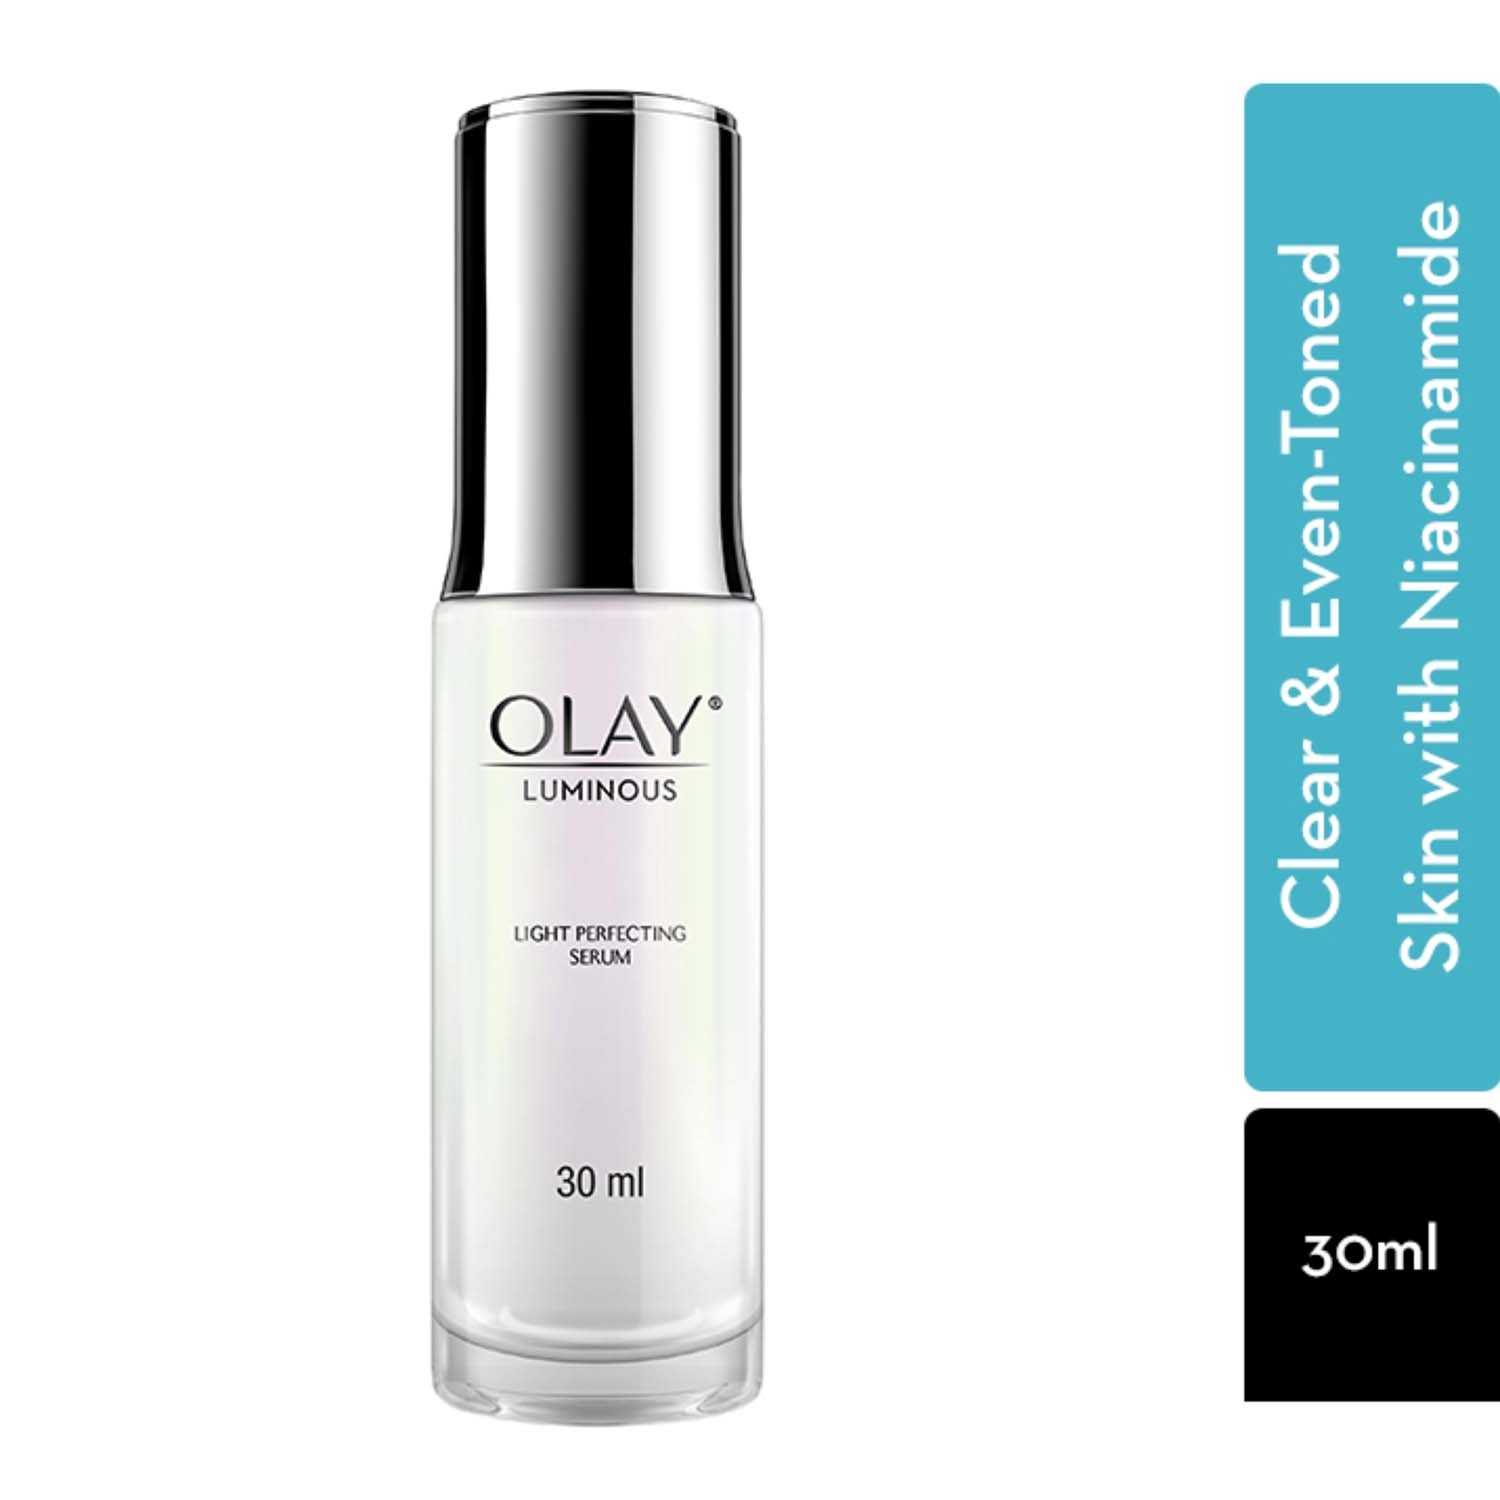 Olay | Olay Luminous Light Perfecting Serum with 99% Niacinamide (30ml)